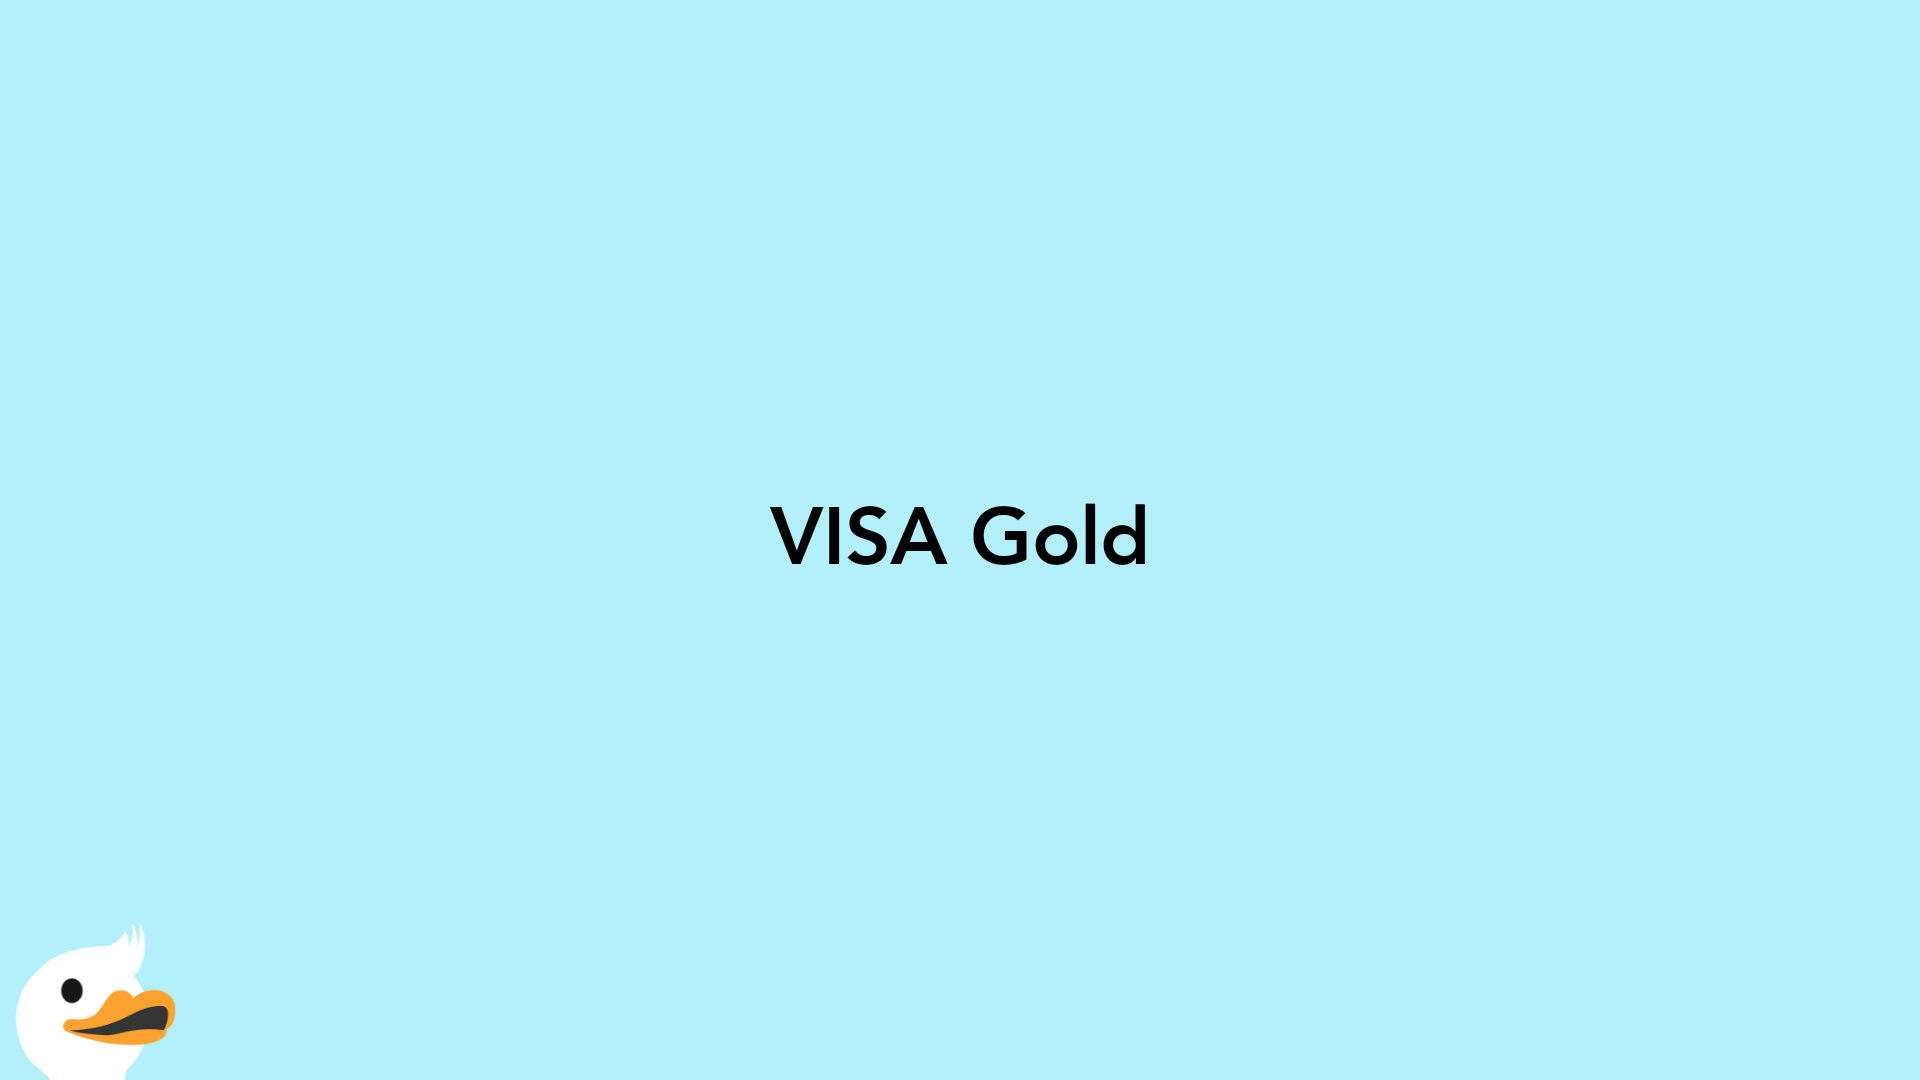 VISA Gold